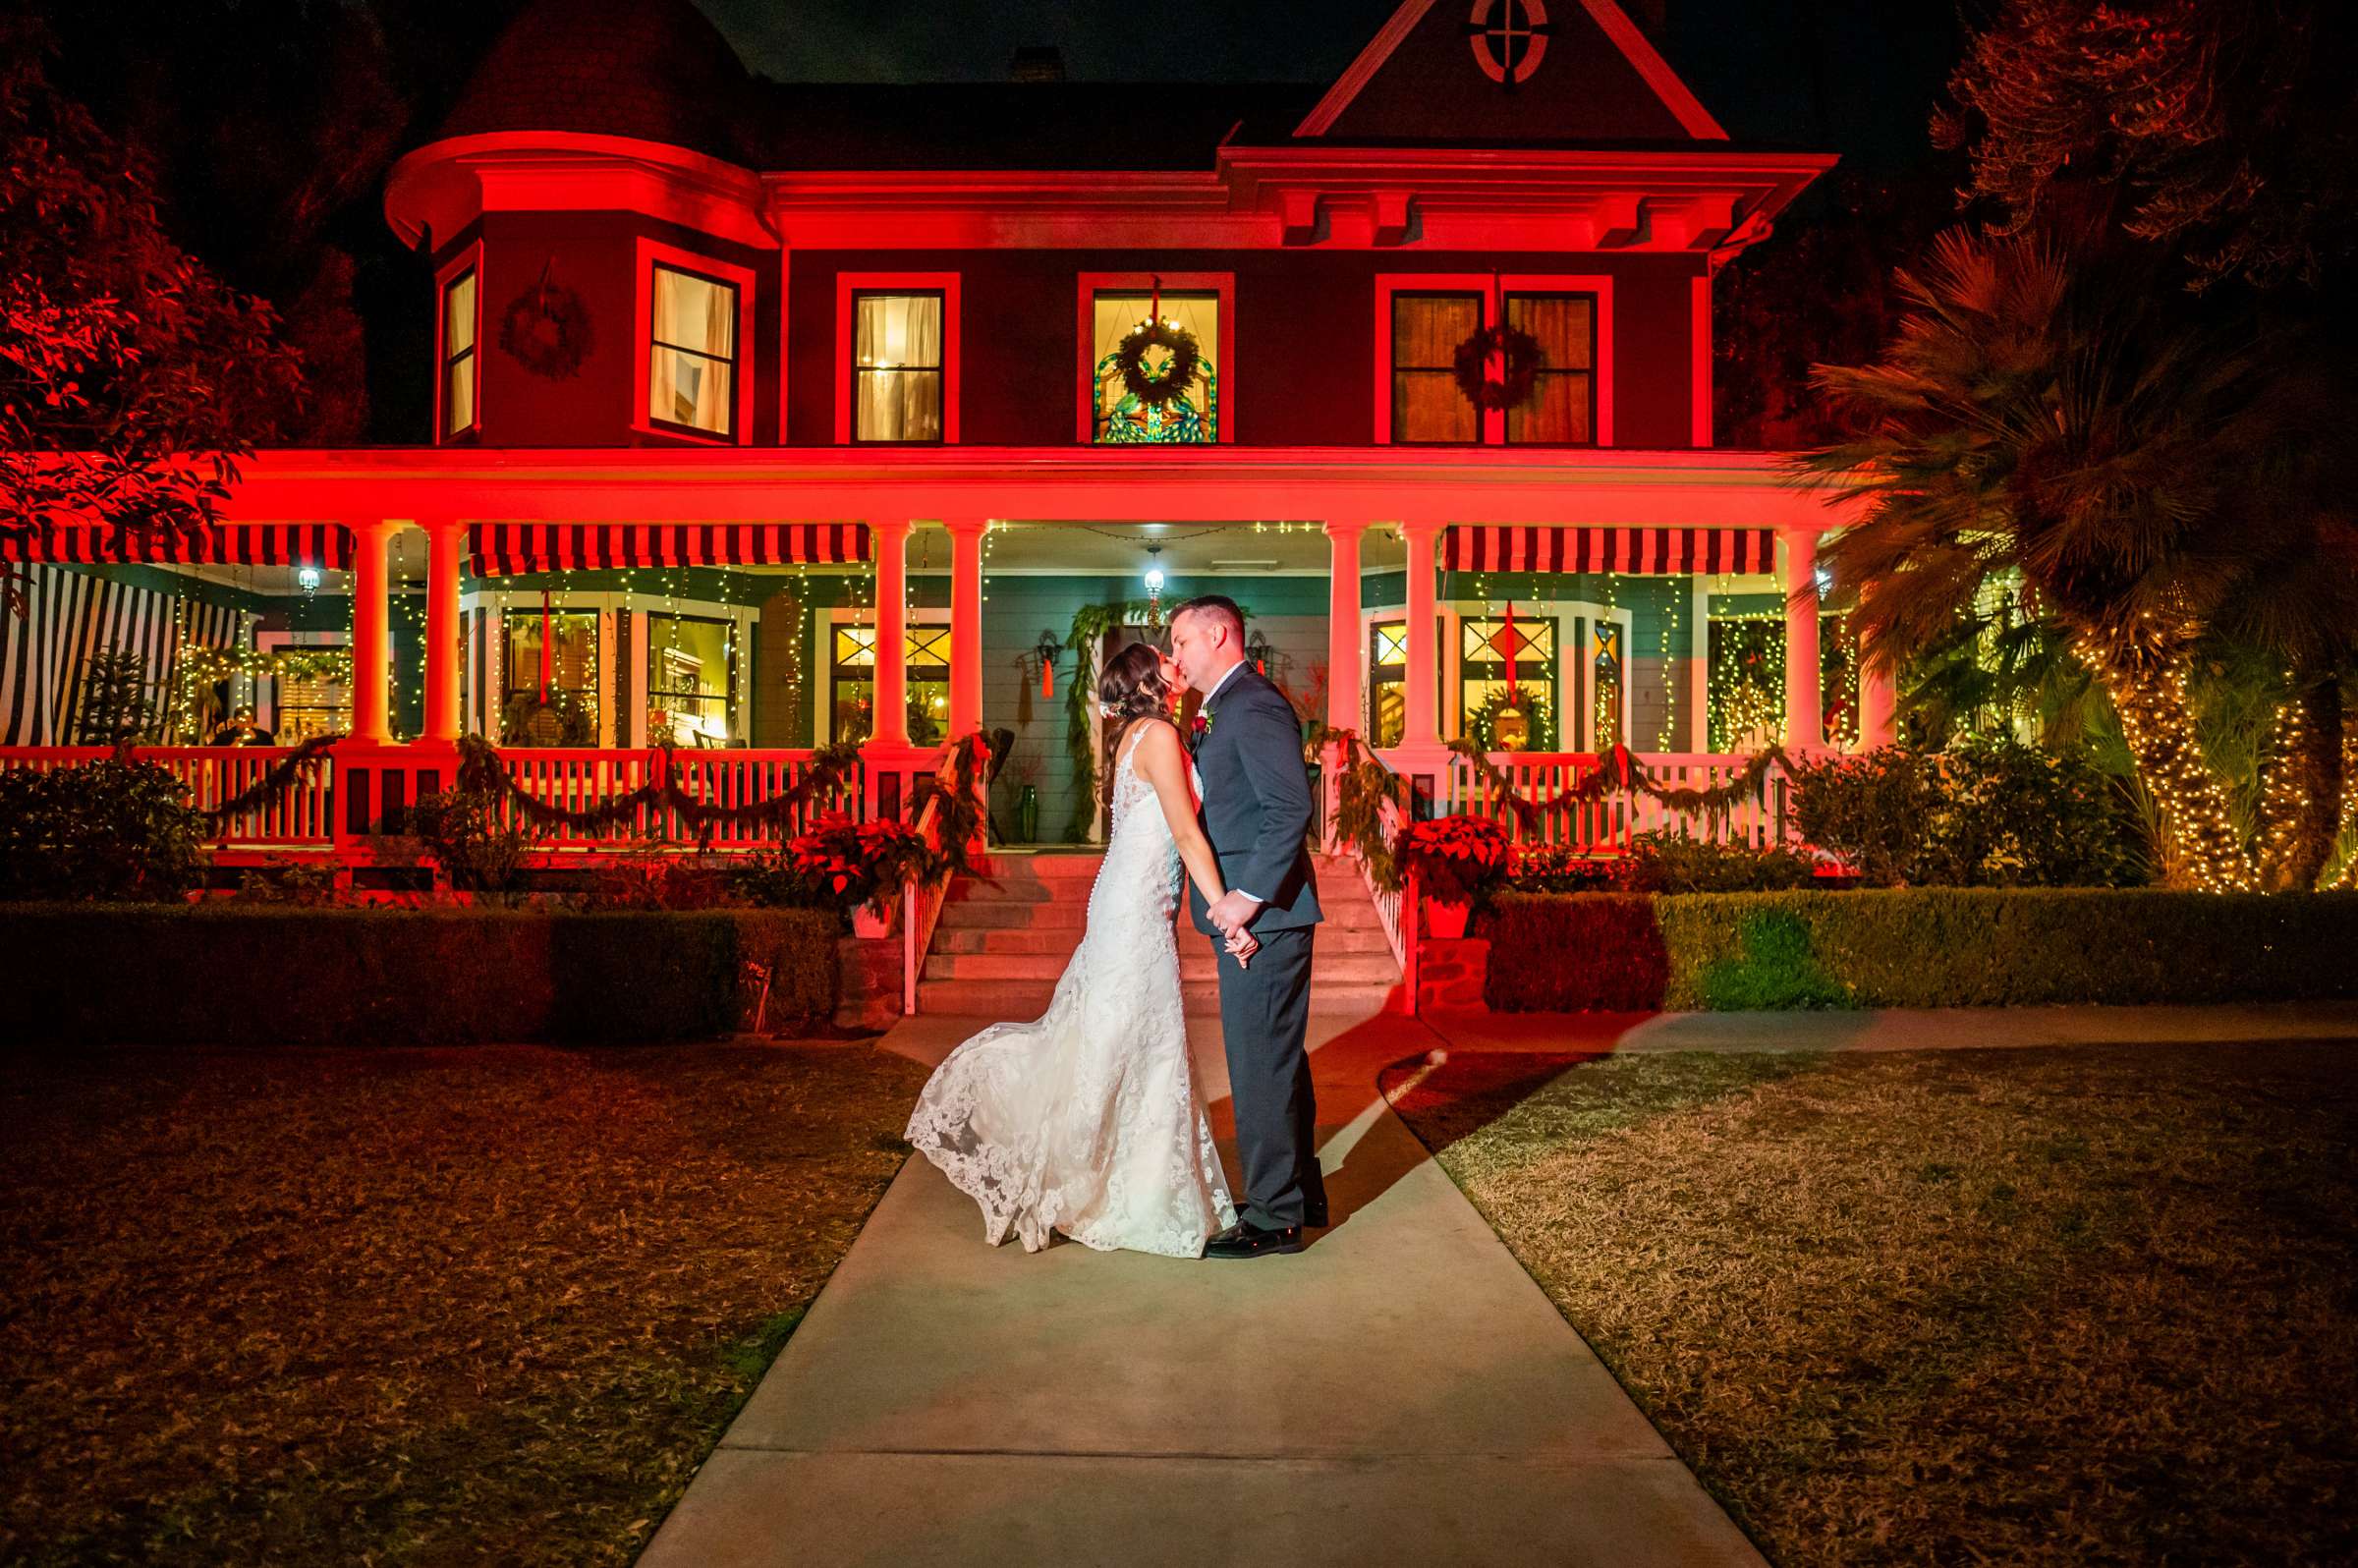 Christmas House Inn & Gardens Wedding, Julia and Steven Wedding Photo #1 by True Photography